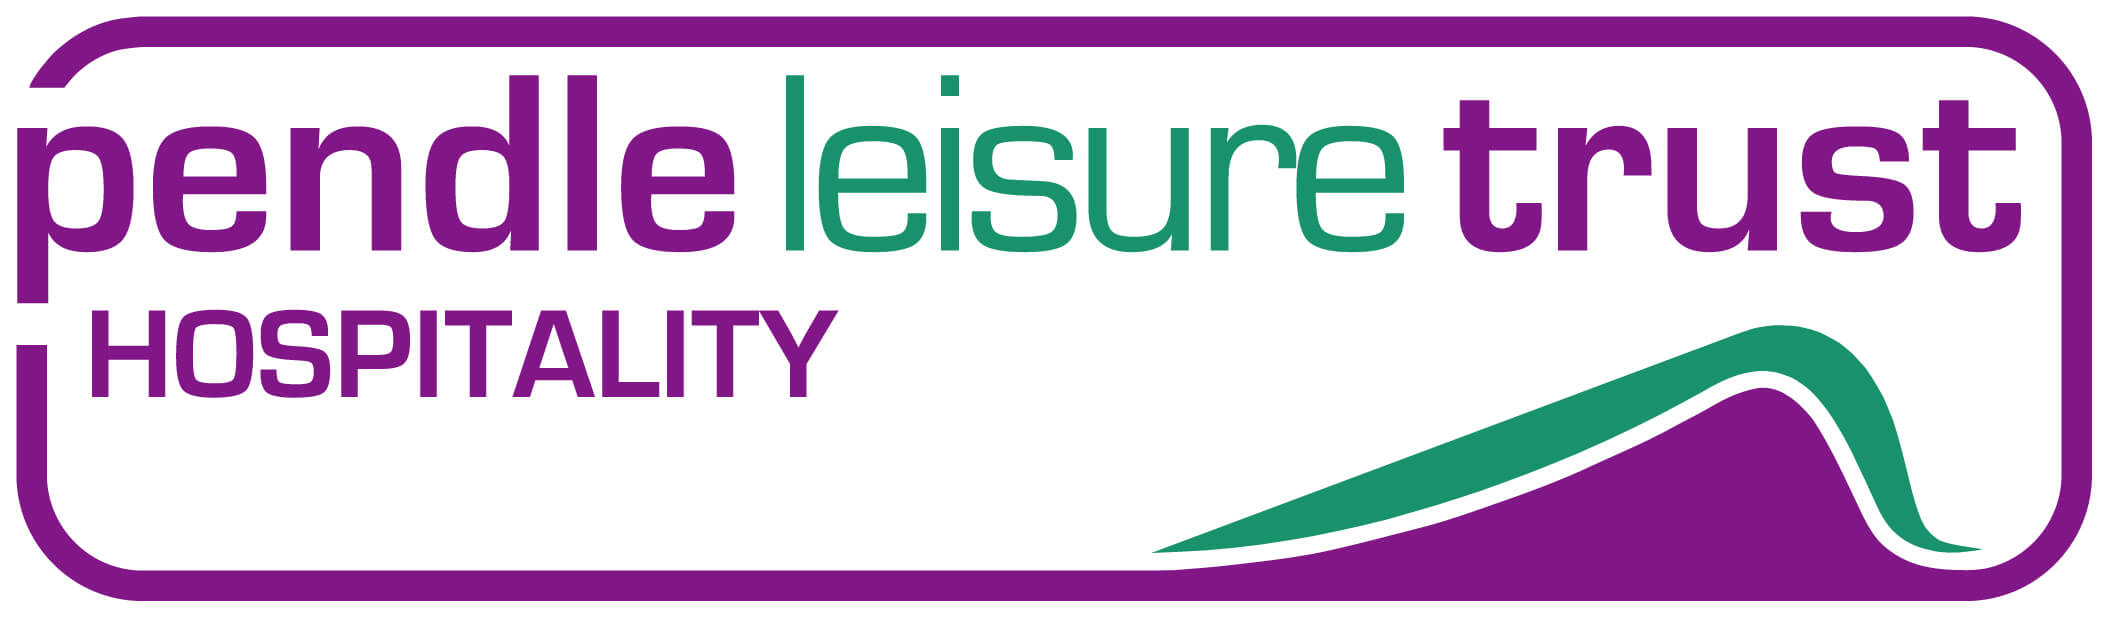 Pendle Leisure Trust featured image